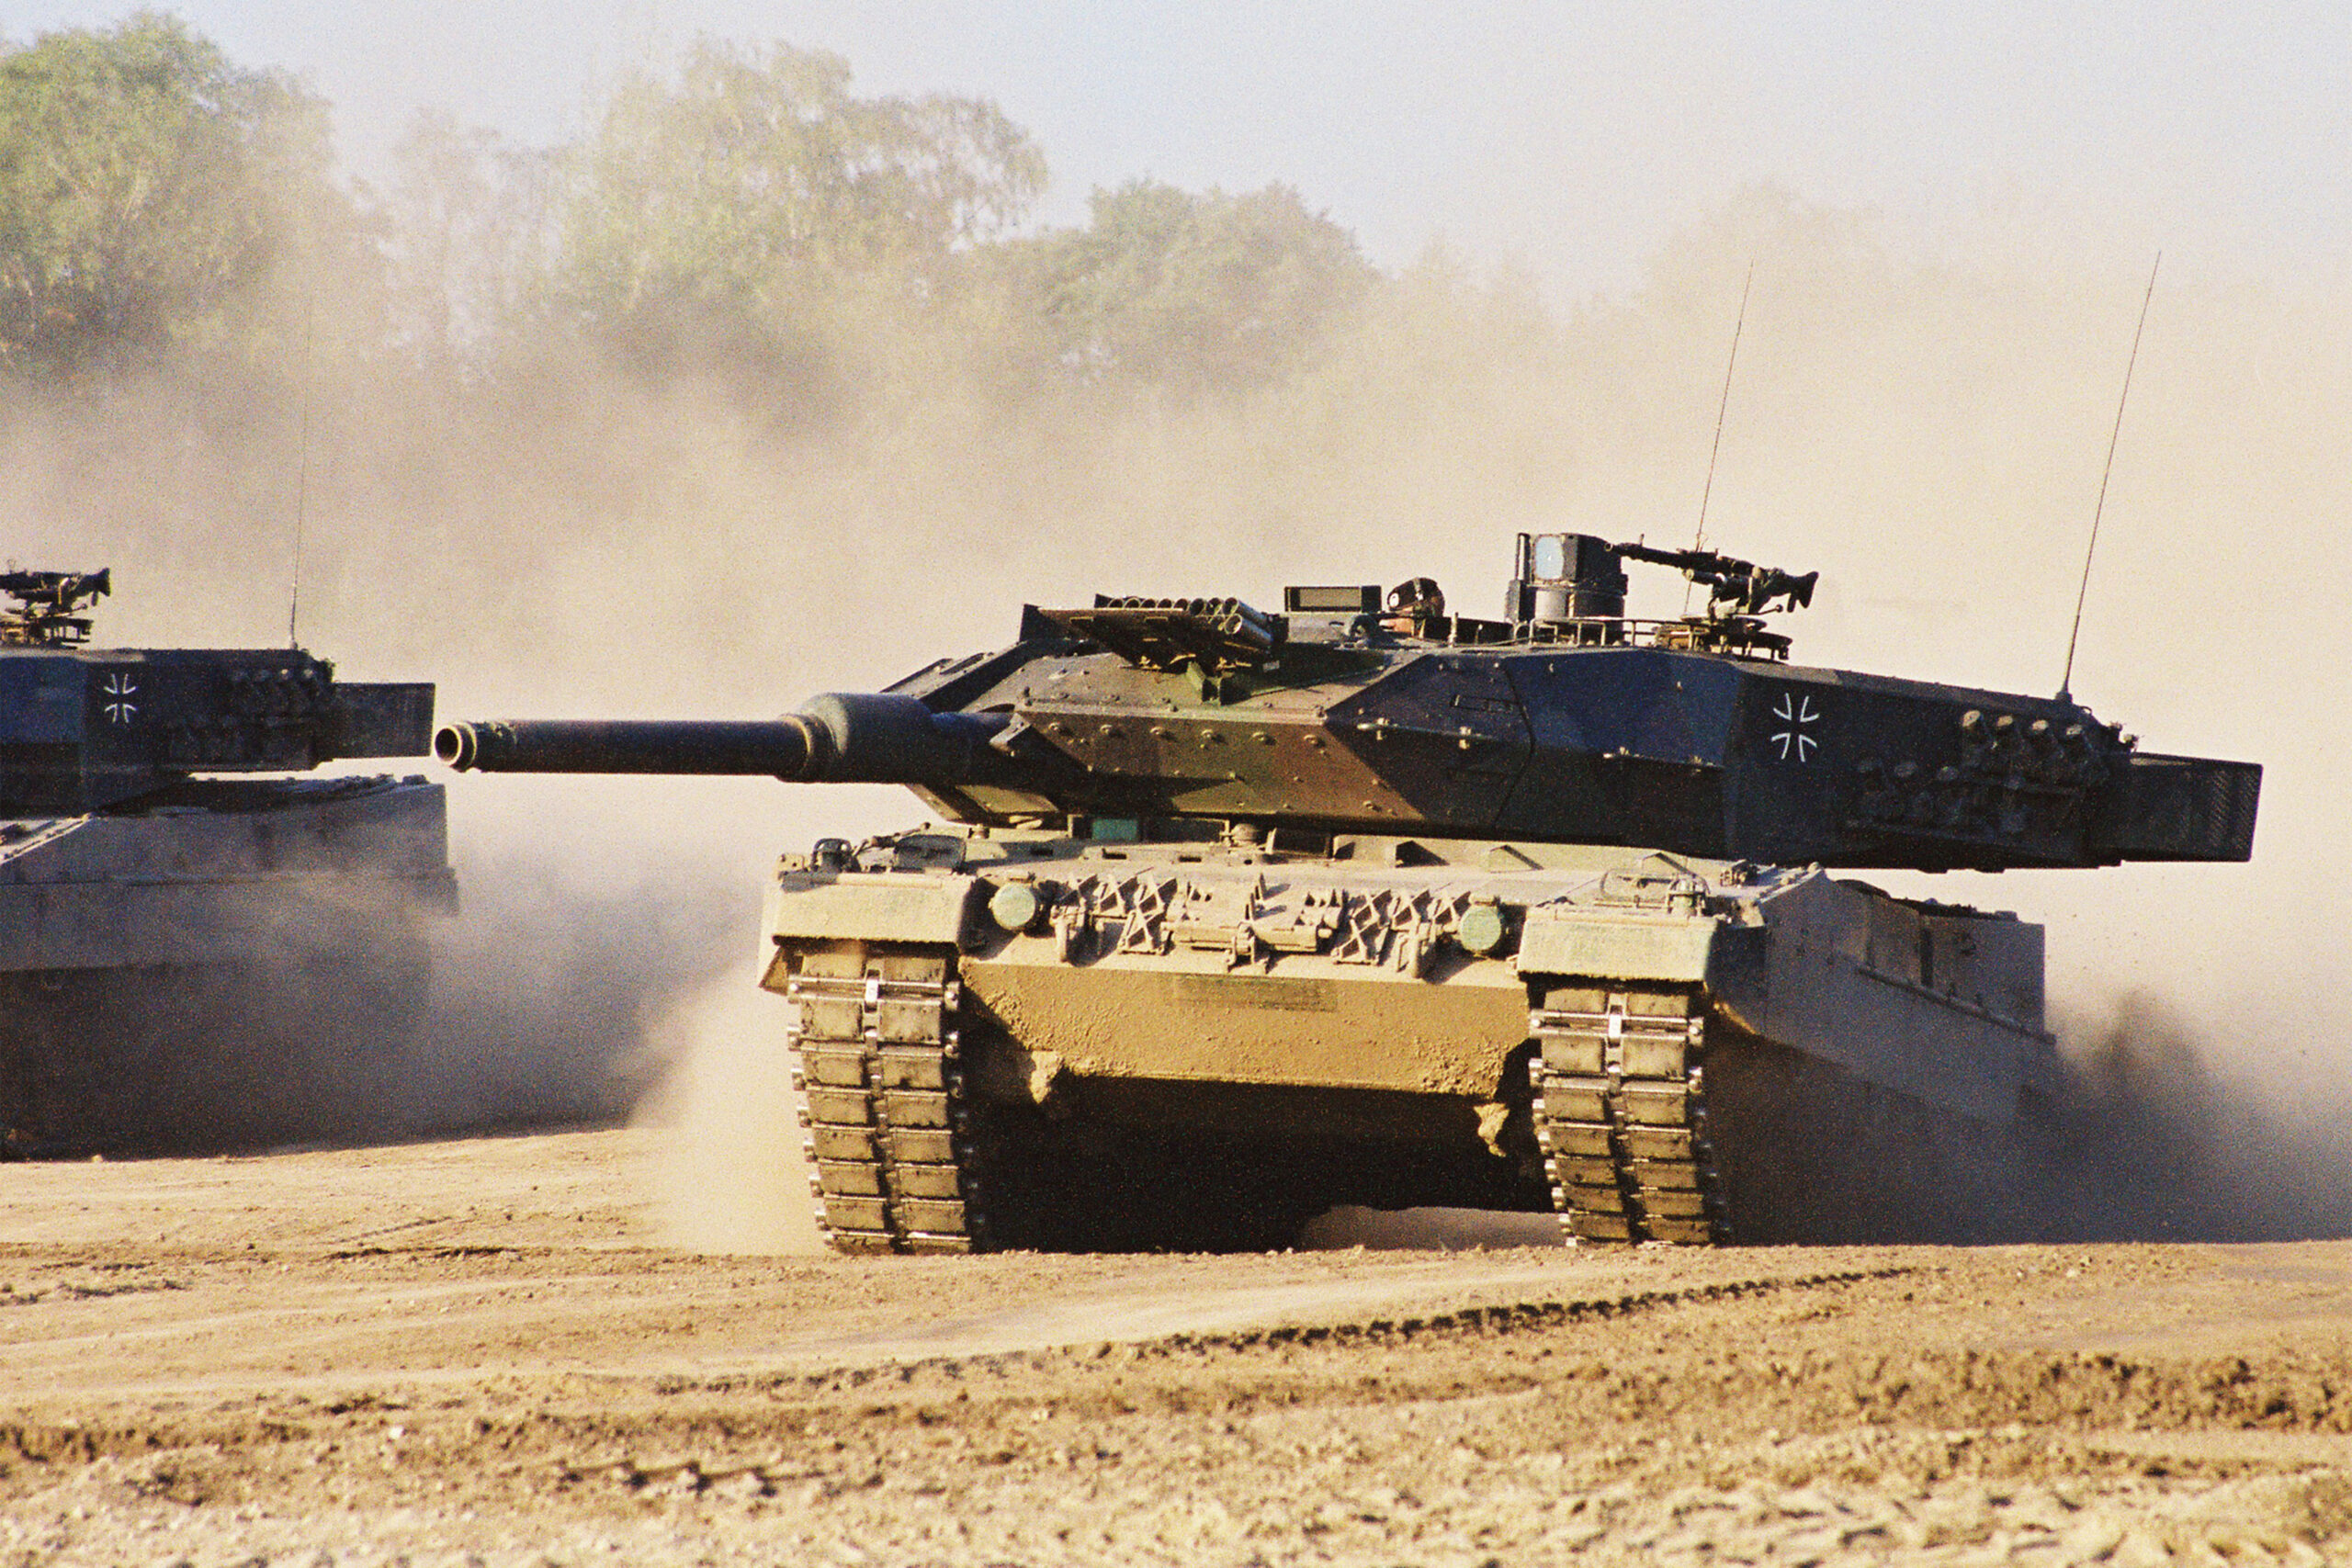 A Leopard 2 A5 tank